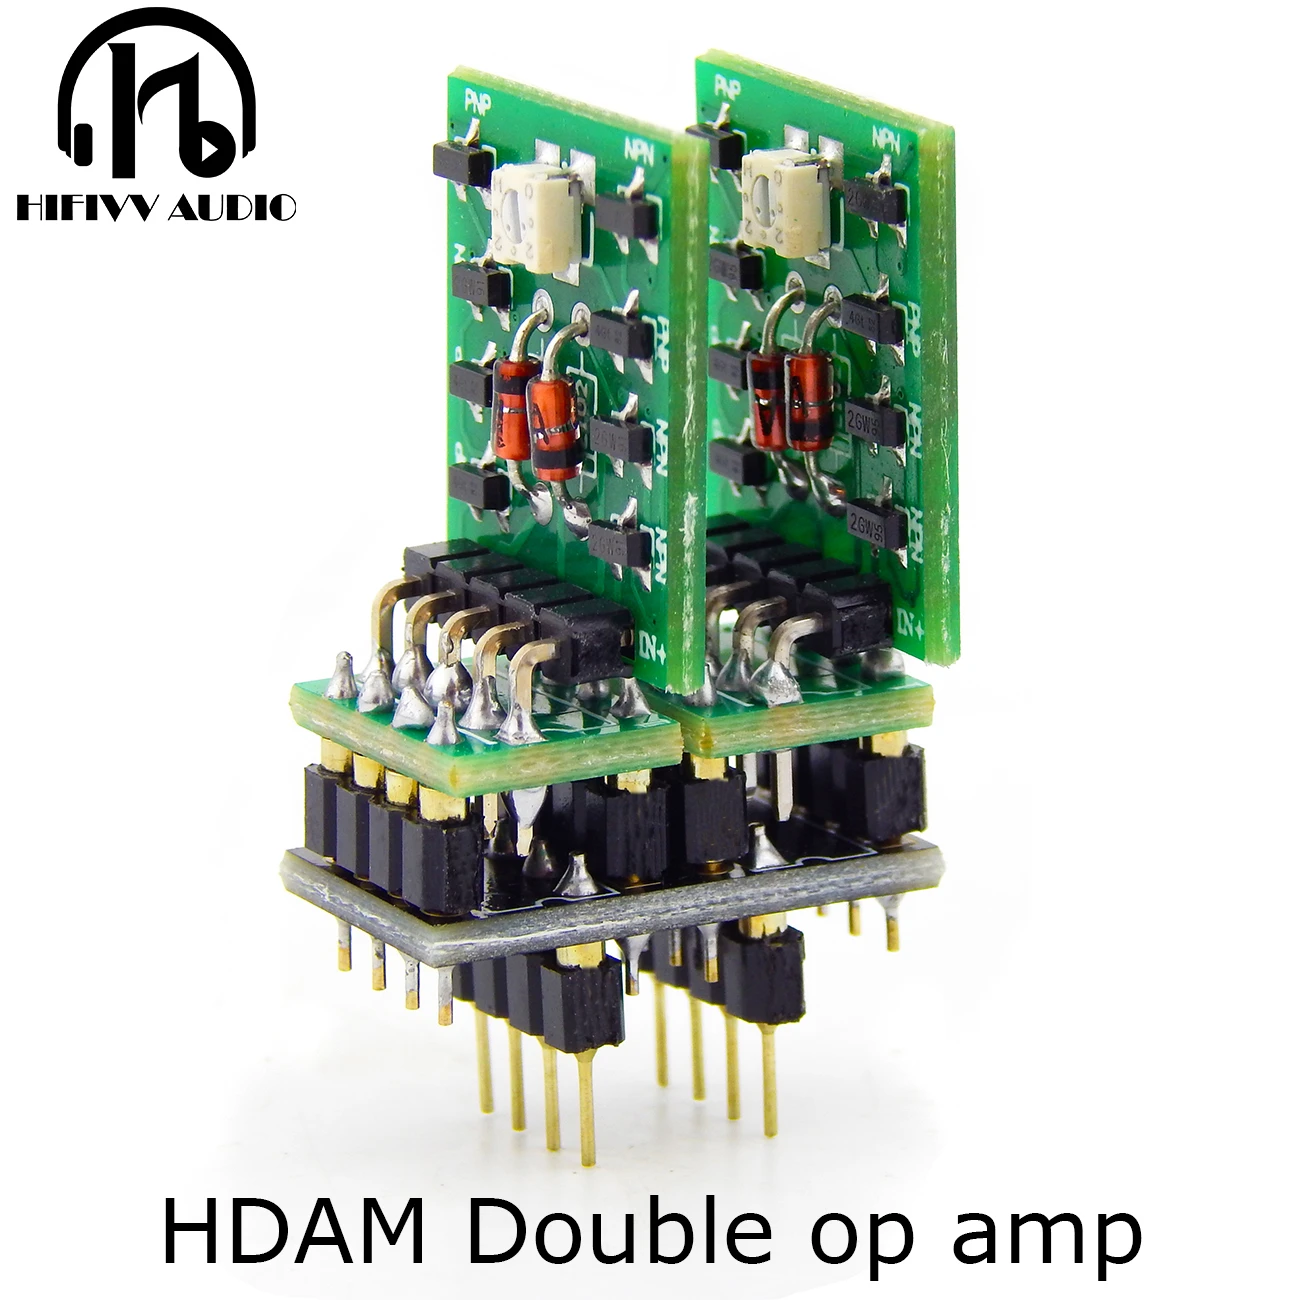 FET MOSFET Triode HDAM Double OP AMP For HiEND Audio Amplifier preamplifier speaker system Replace NE5532 LME49720 MUS02 OPA2604 4 channel amp